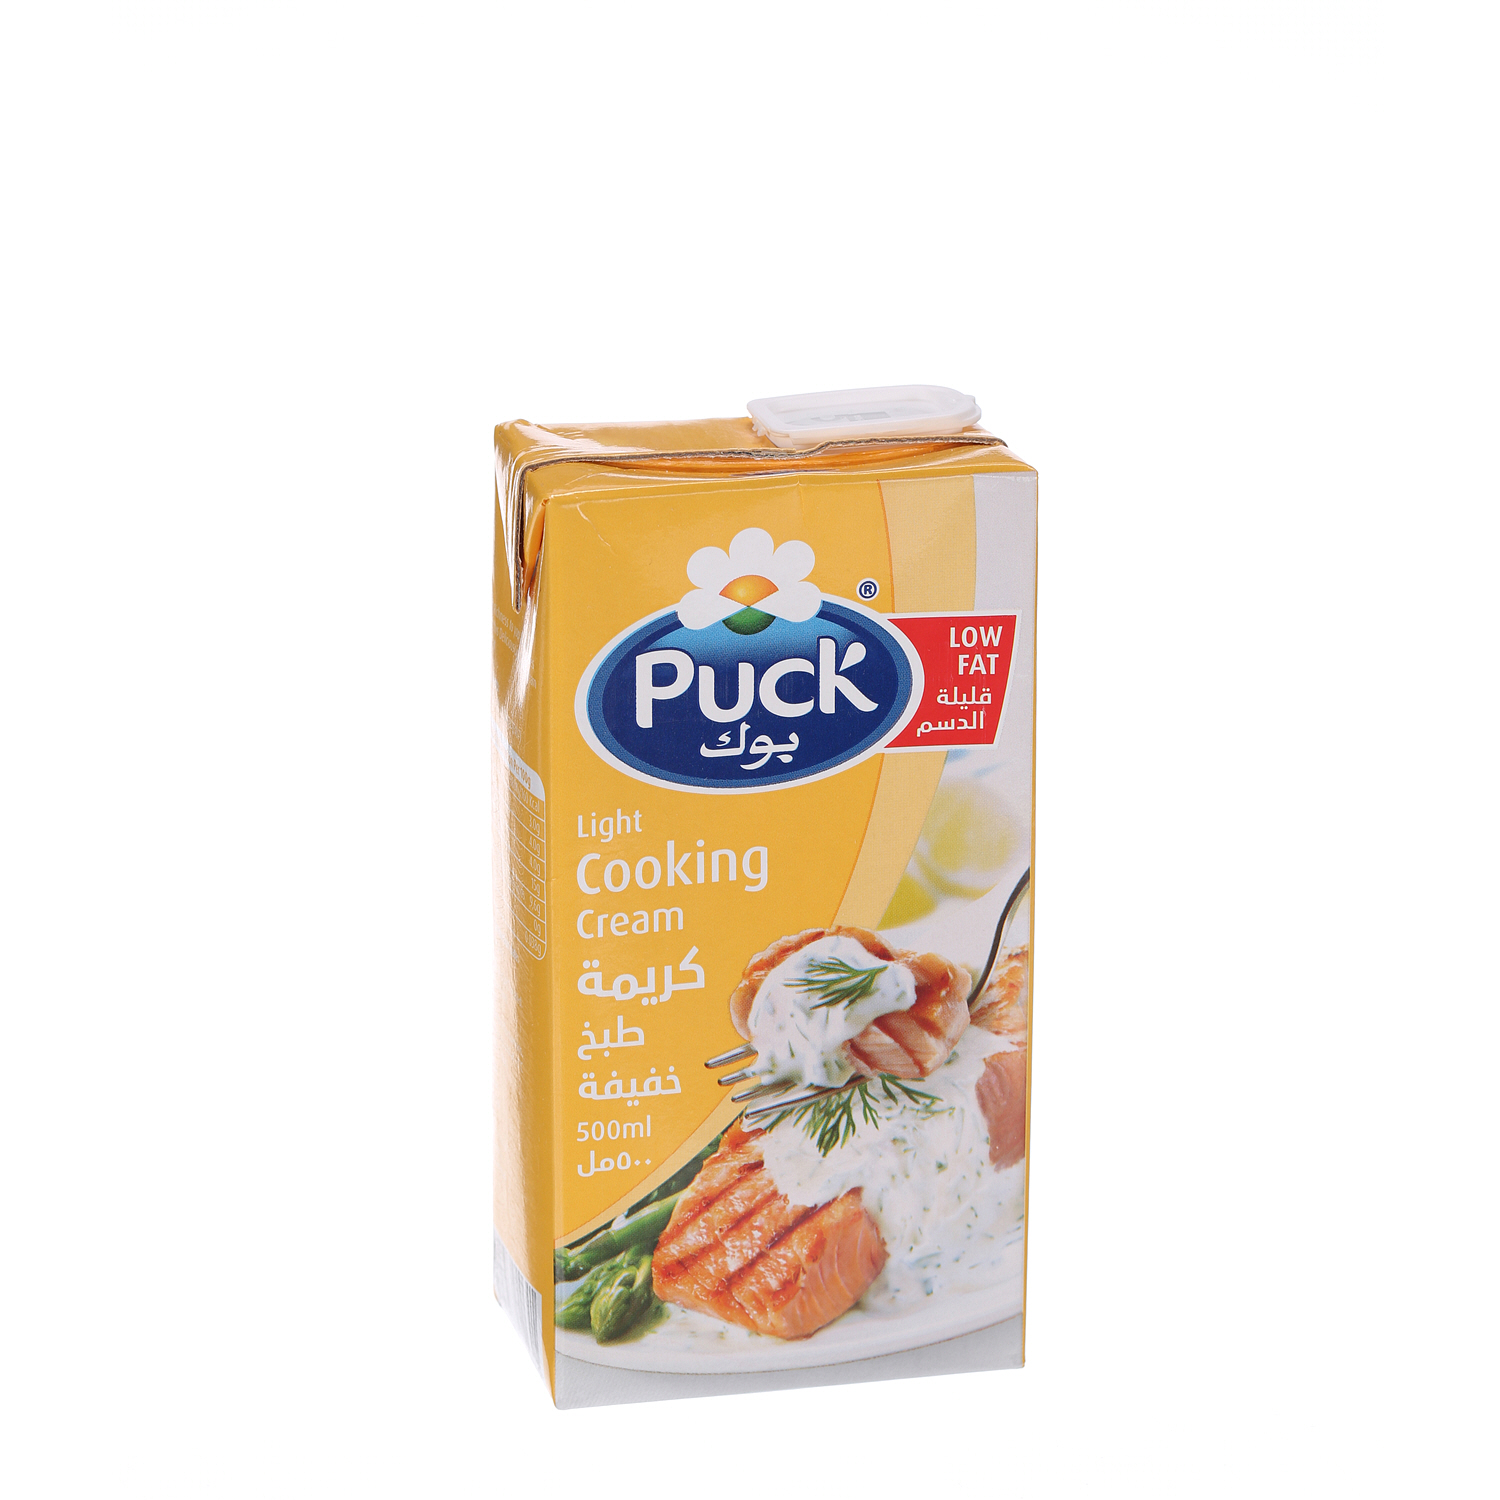 Puck Cooking Cream Light 500ml